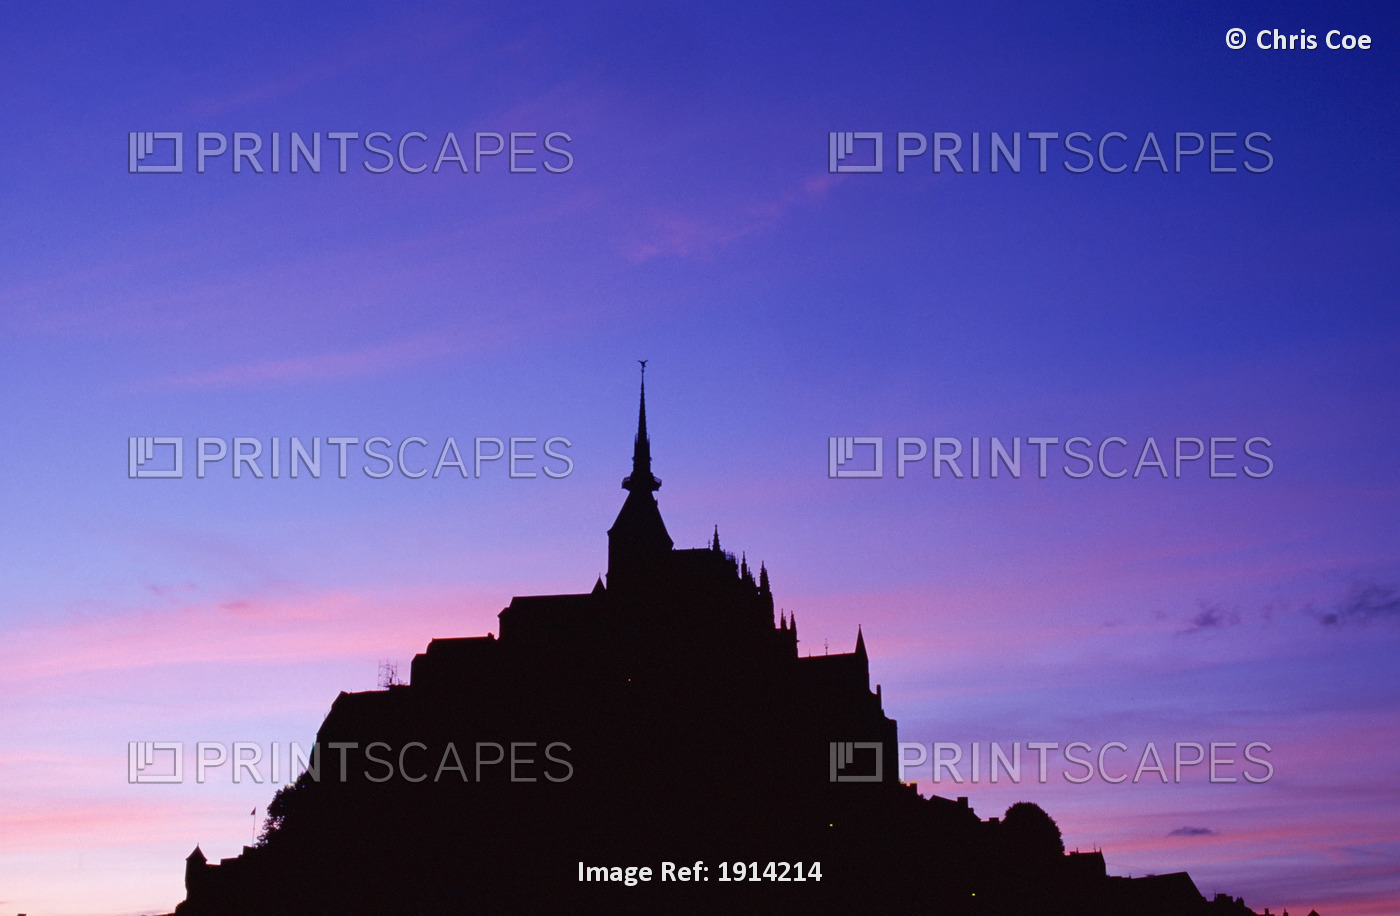 Mont St. Michel At Sunset